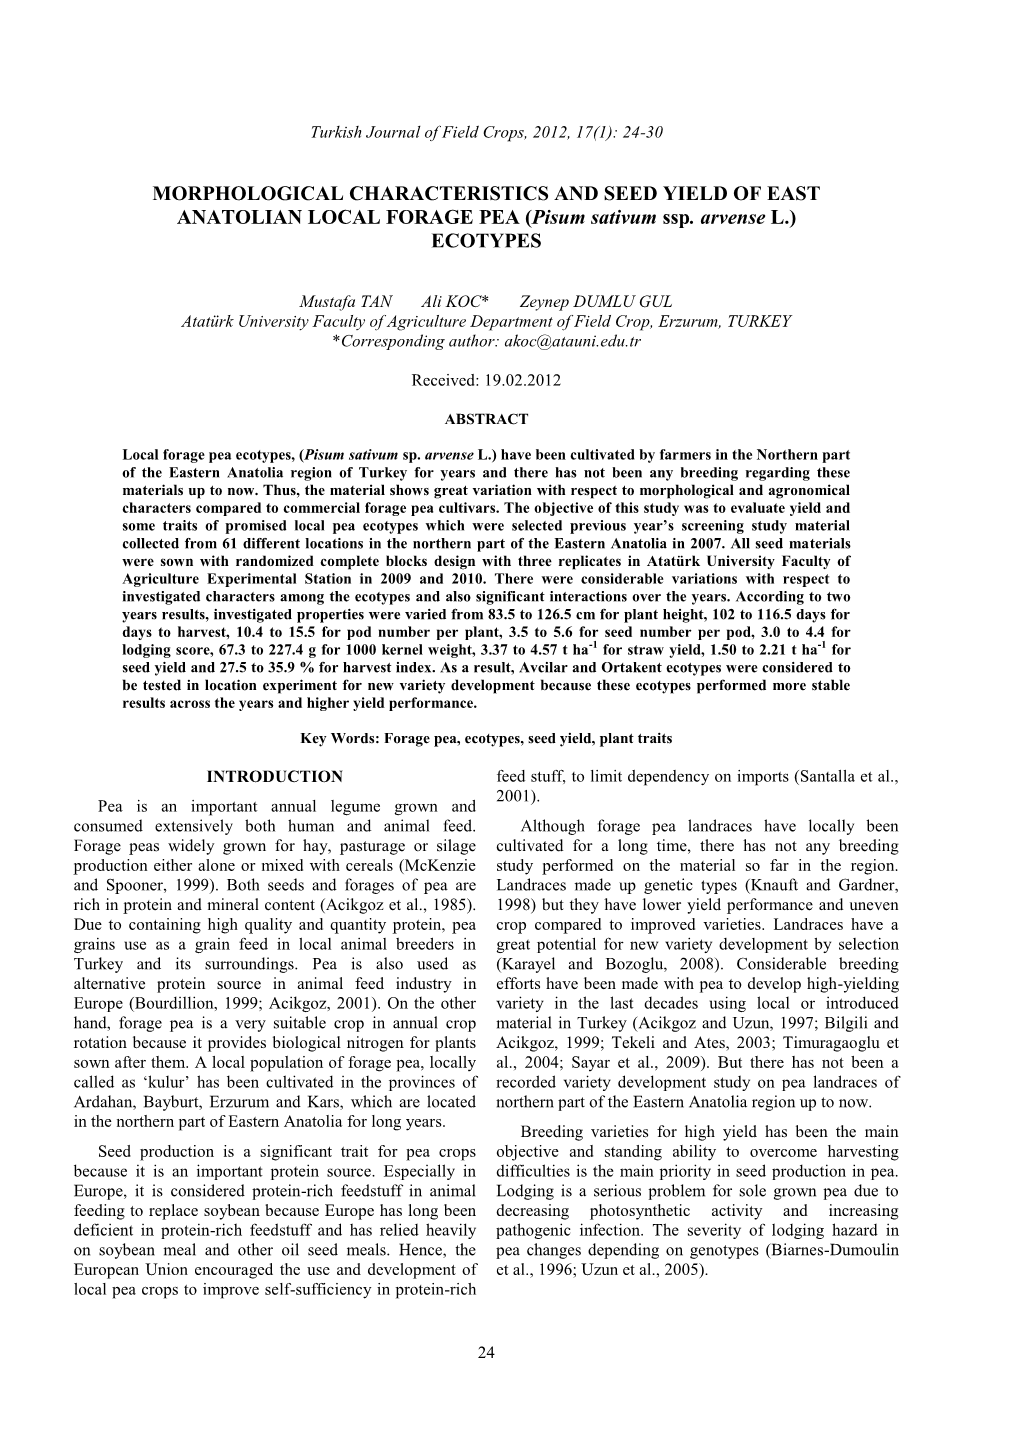 MORPHOLOGICAL CHARACTERISTICS and SEED YIELD of EAST ANATOLIAN LOCAL FORAGE PEA (Pisum Sativum Ssp. Arvense L.) ECOTYPES